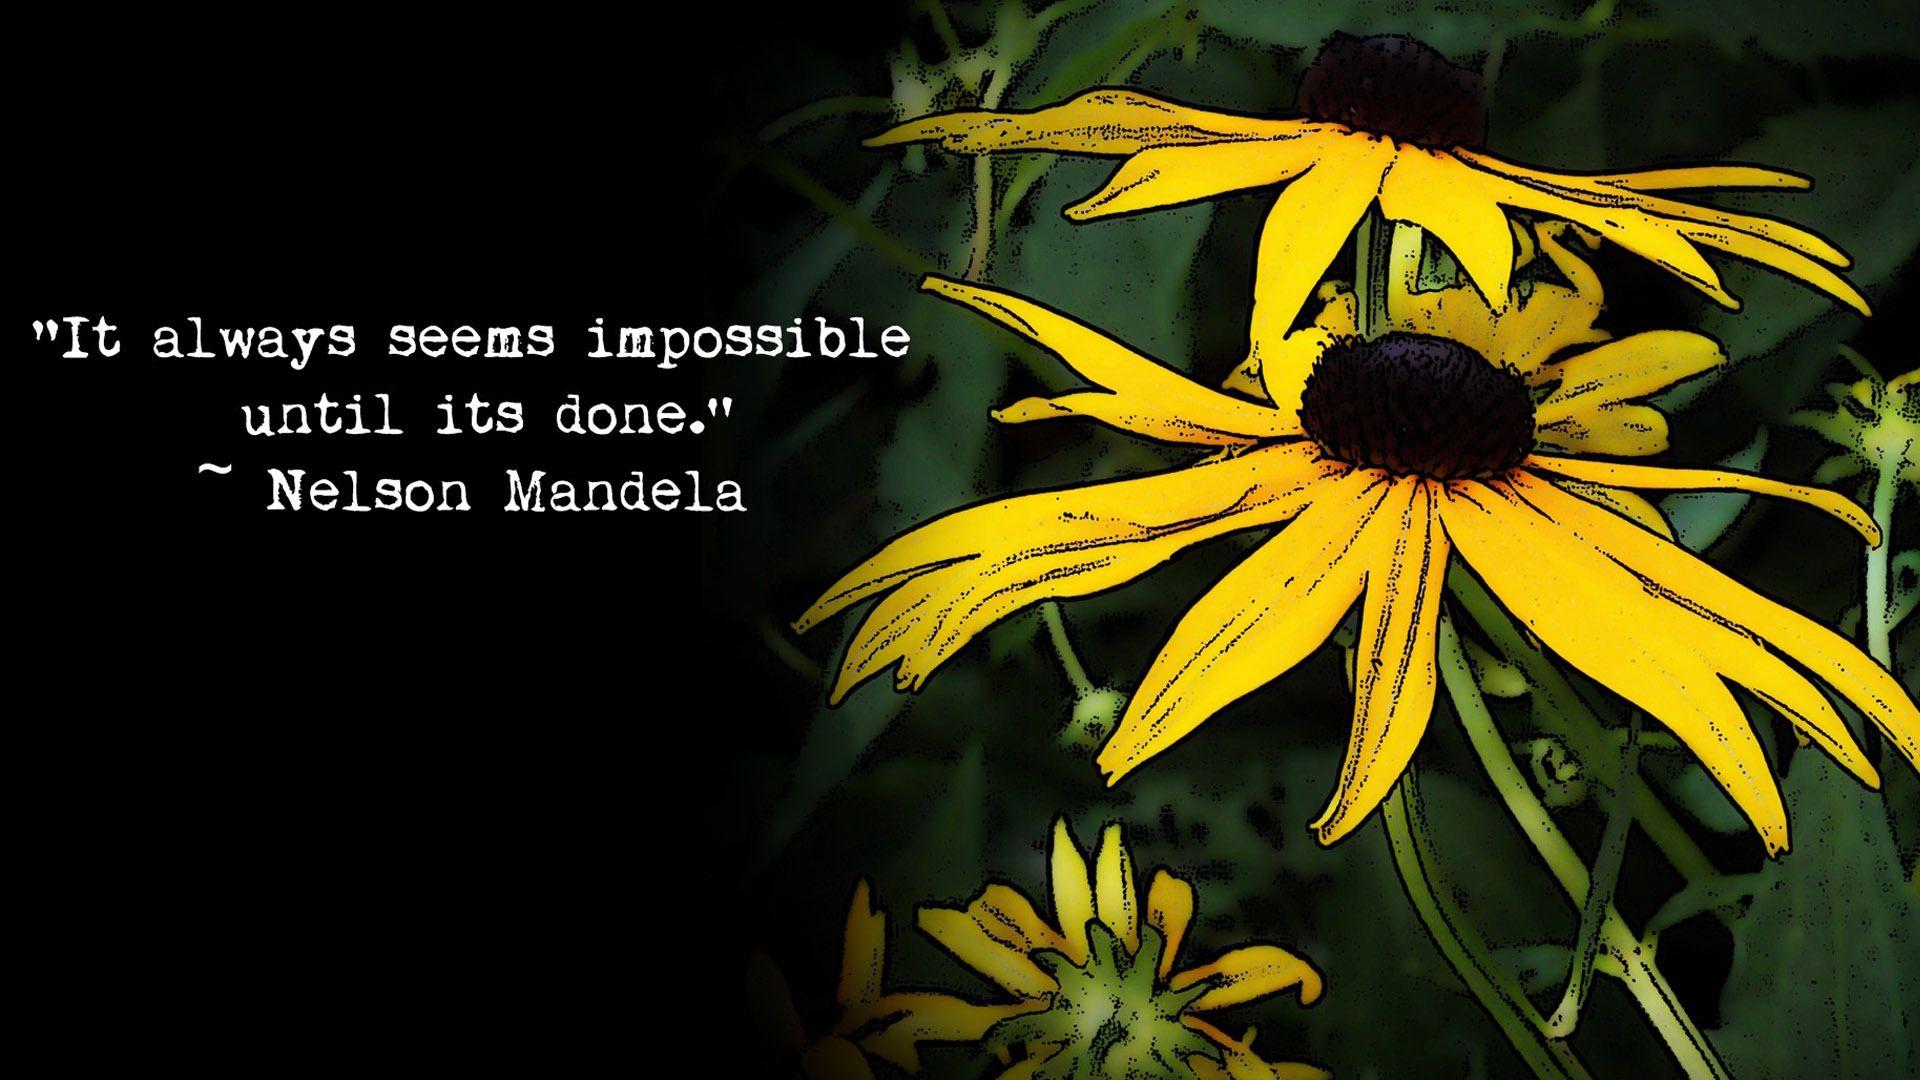 Nelson Mandela quote Wallpaper